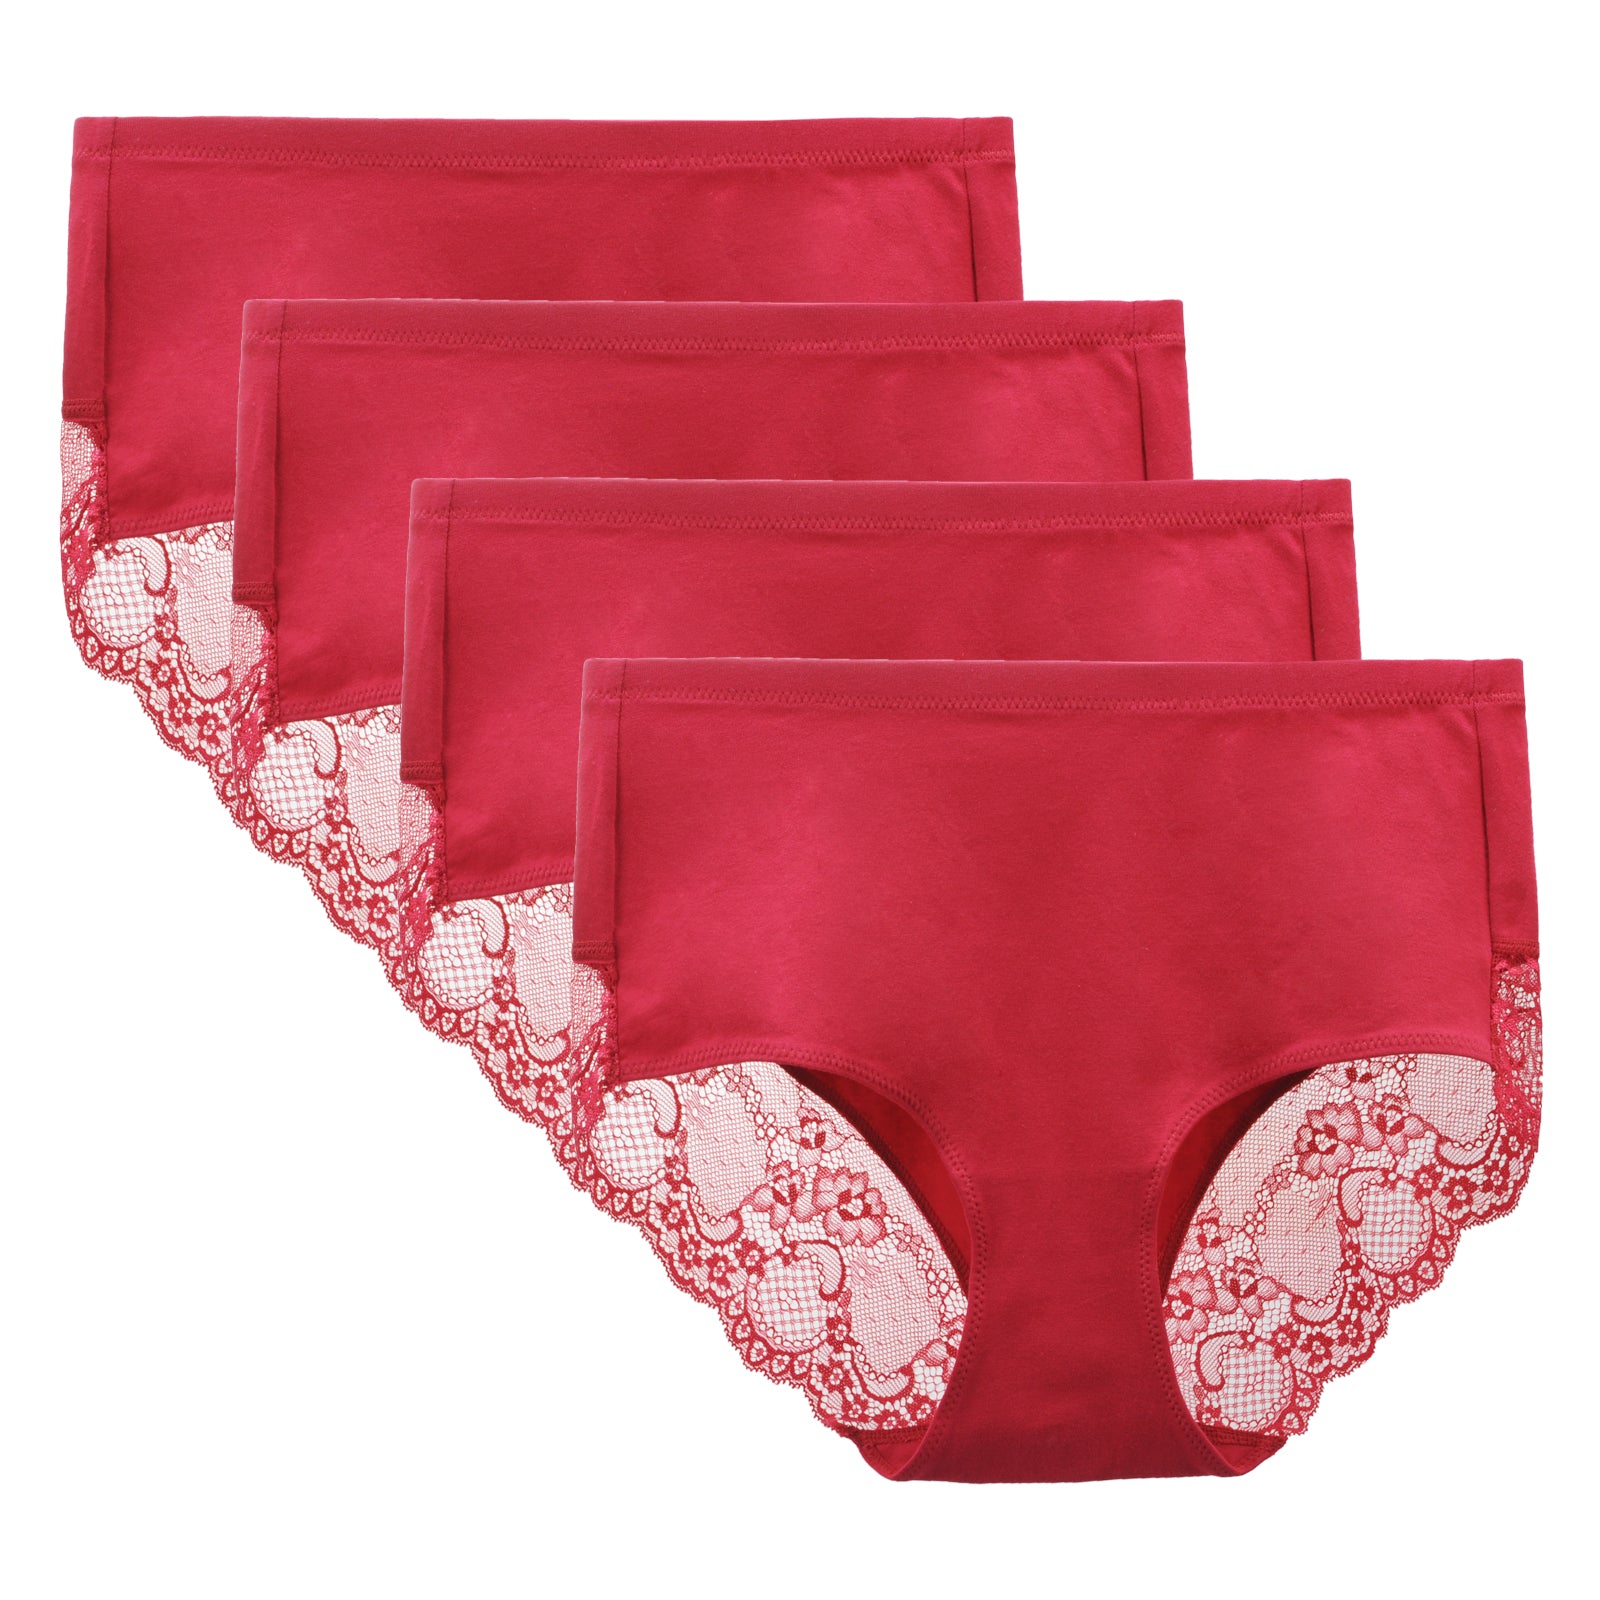 Tompik Women's Assorted colour Cotton Spandex High Waist Panty